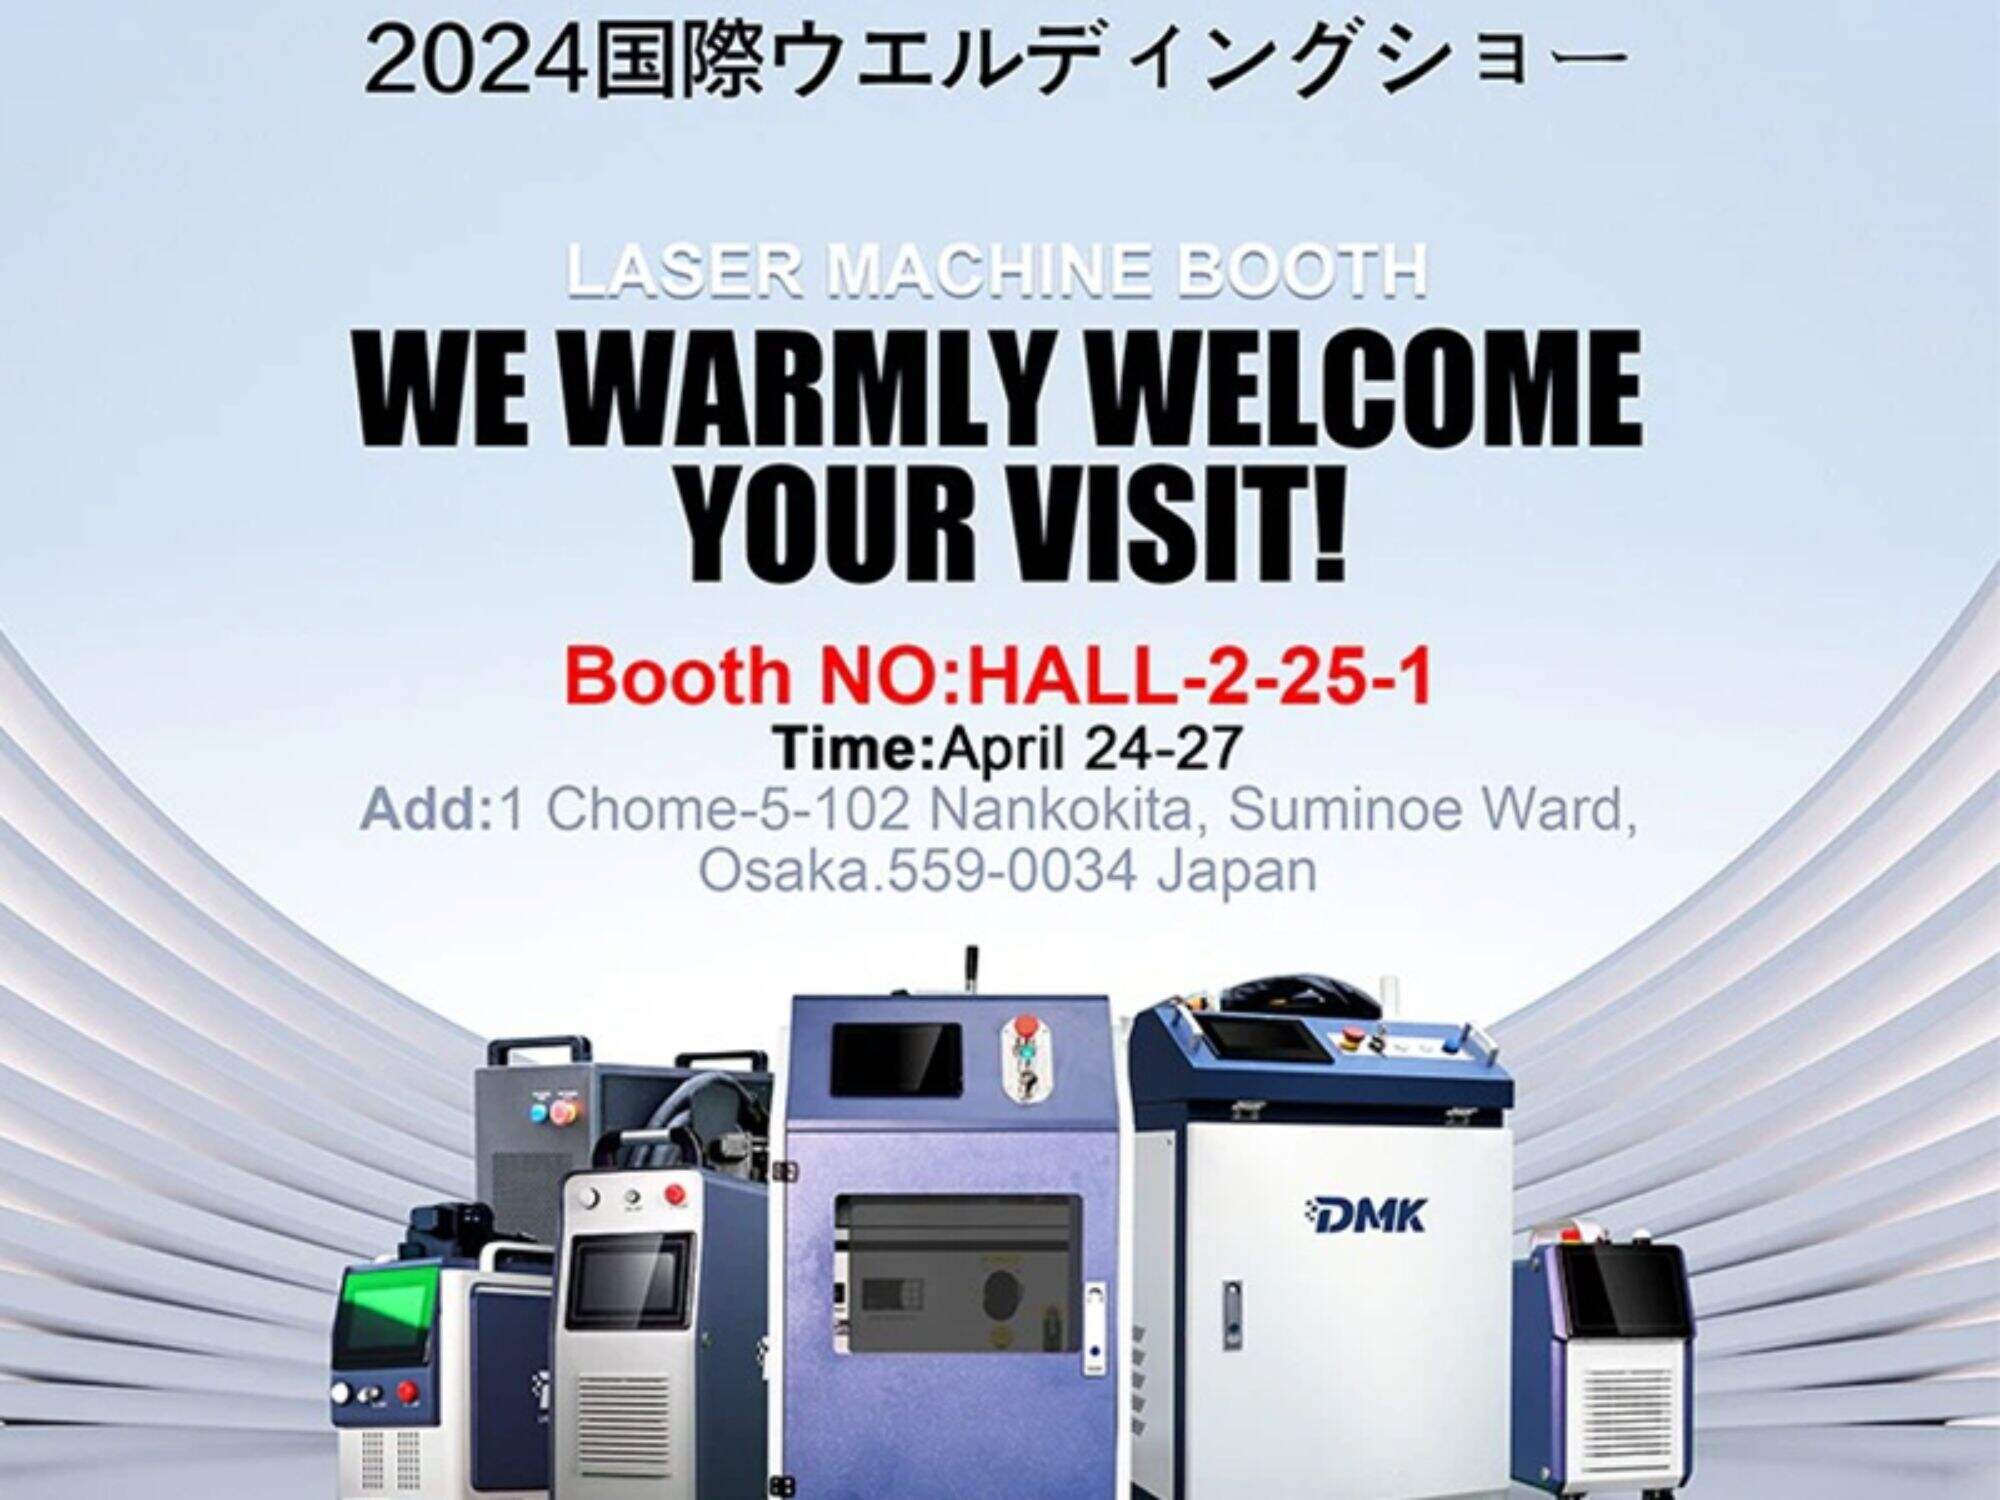 DMK візьме участь у Japan International Welding Show 2024